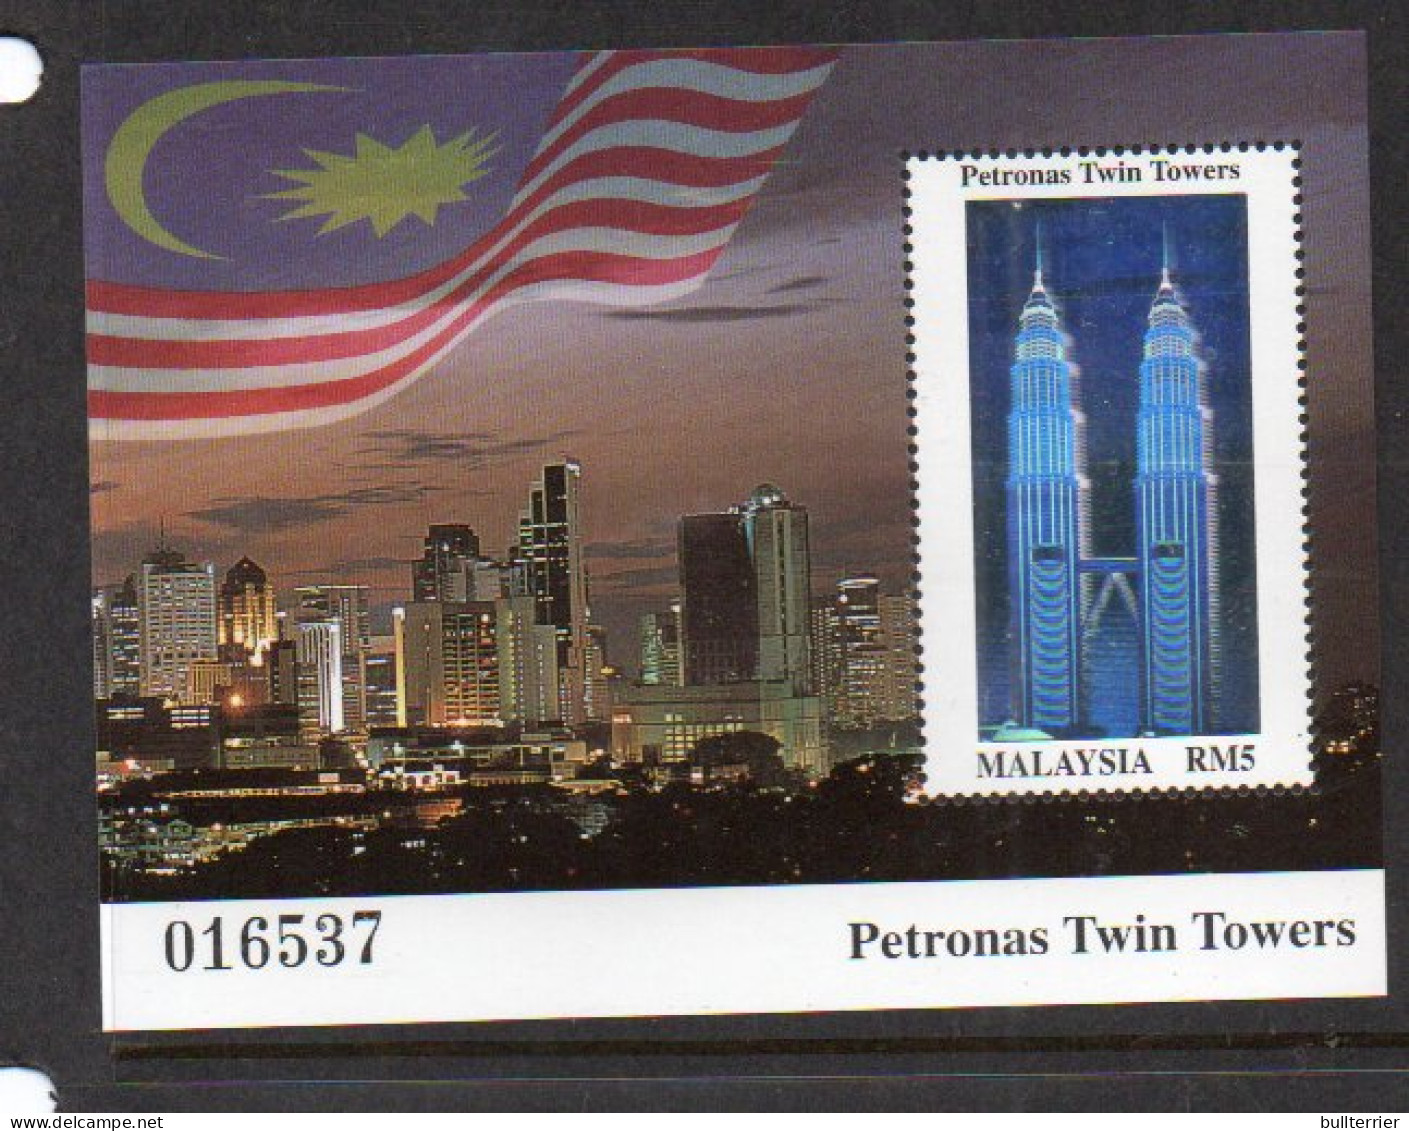 HOLOGRAMS - MALAYSIA - 1999 - PETRONAS TOWER  HOLOGRAM  SOUVENIR SHEET  MINT NEVER HINGED  - Hologrammen